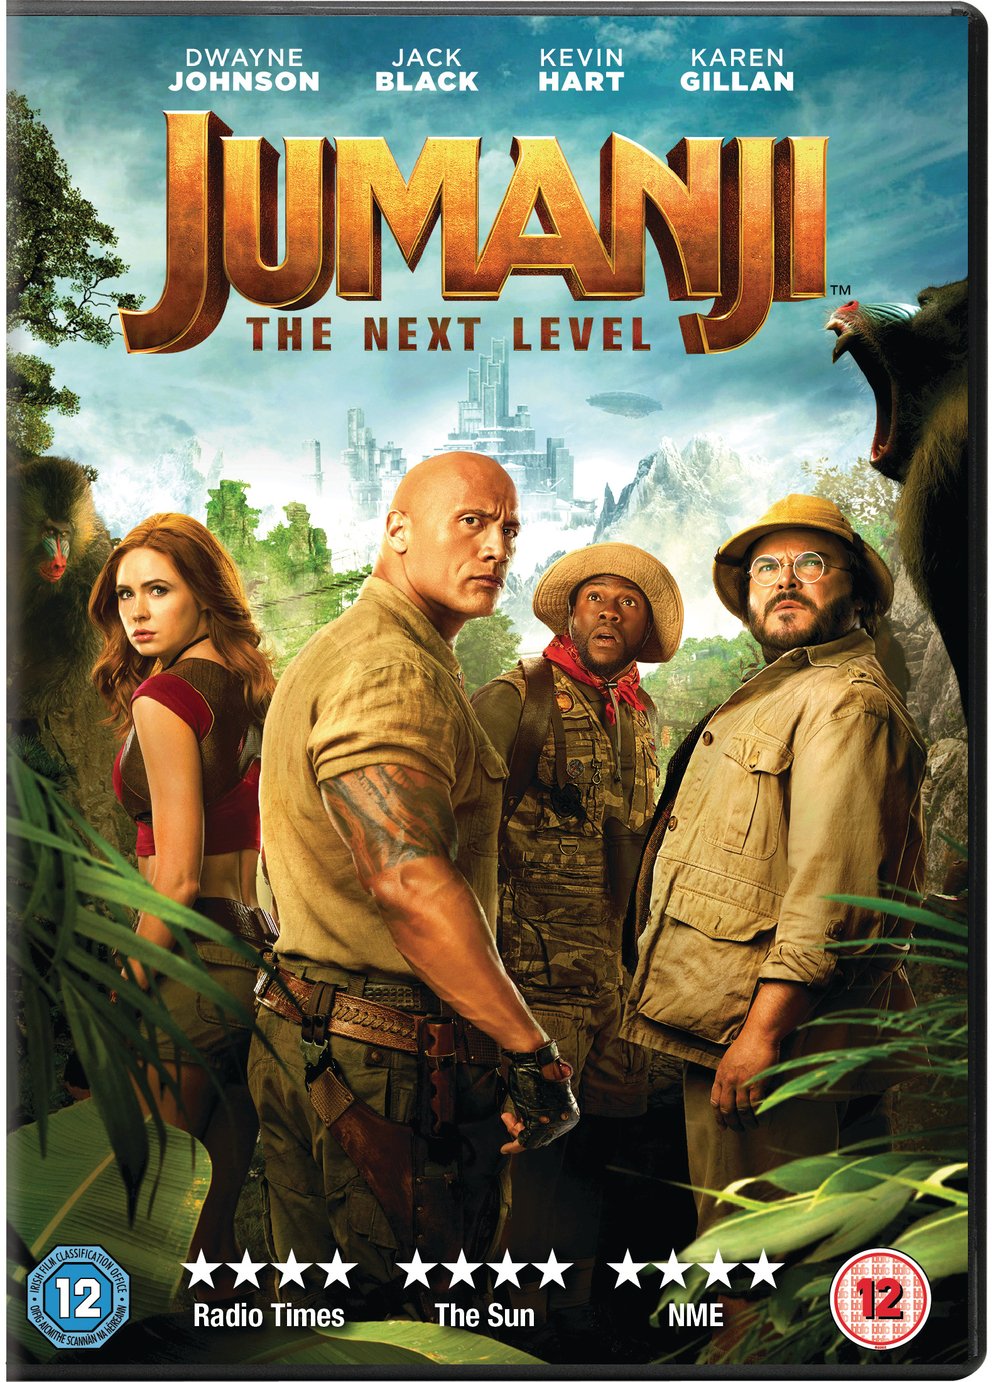 Jumanji: The Next Level DVD Review